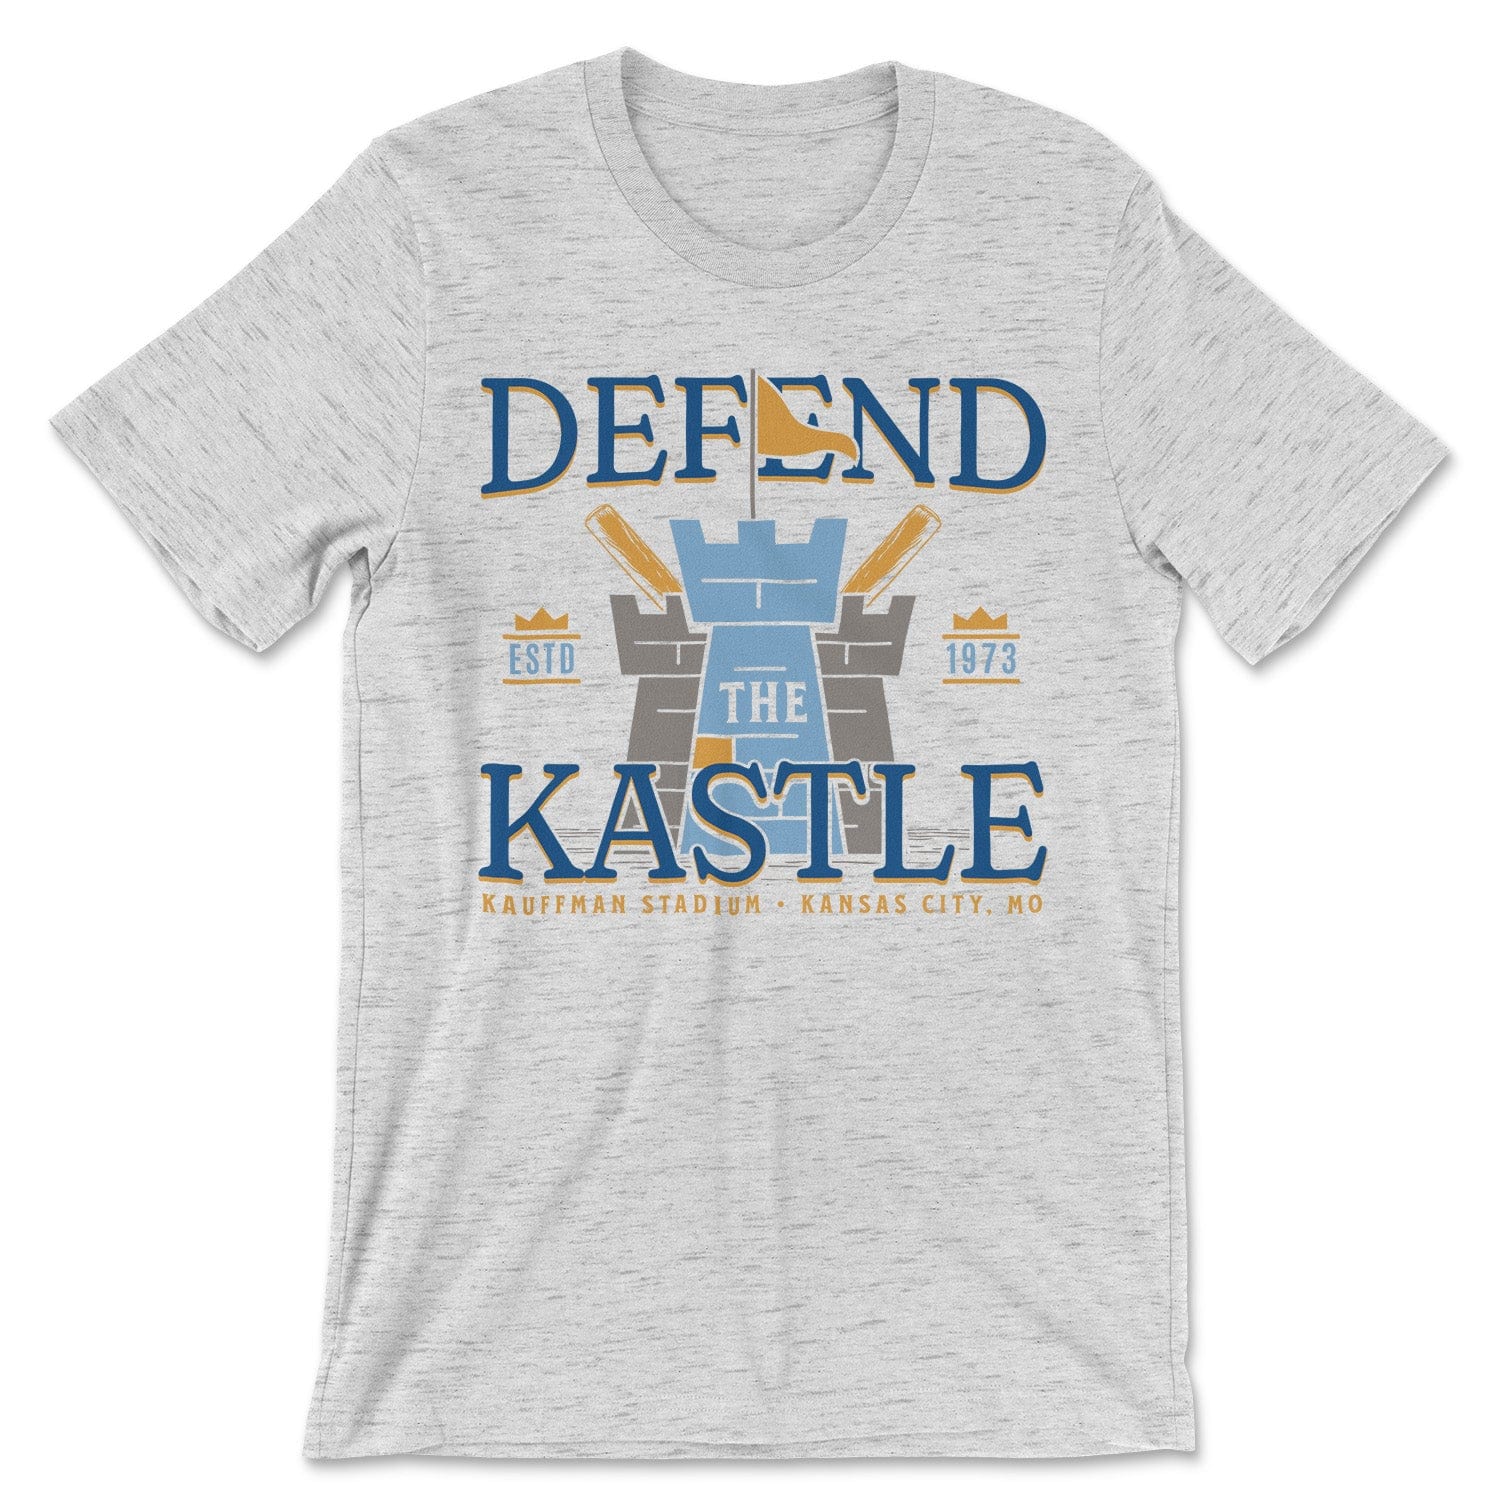 KC Swag Kansas City Royals powder, blue, gold DEFEND THE KASTLE on ash heather grey unisex t-shirt 